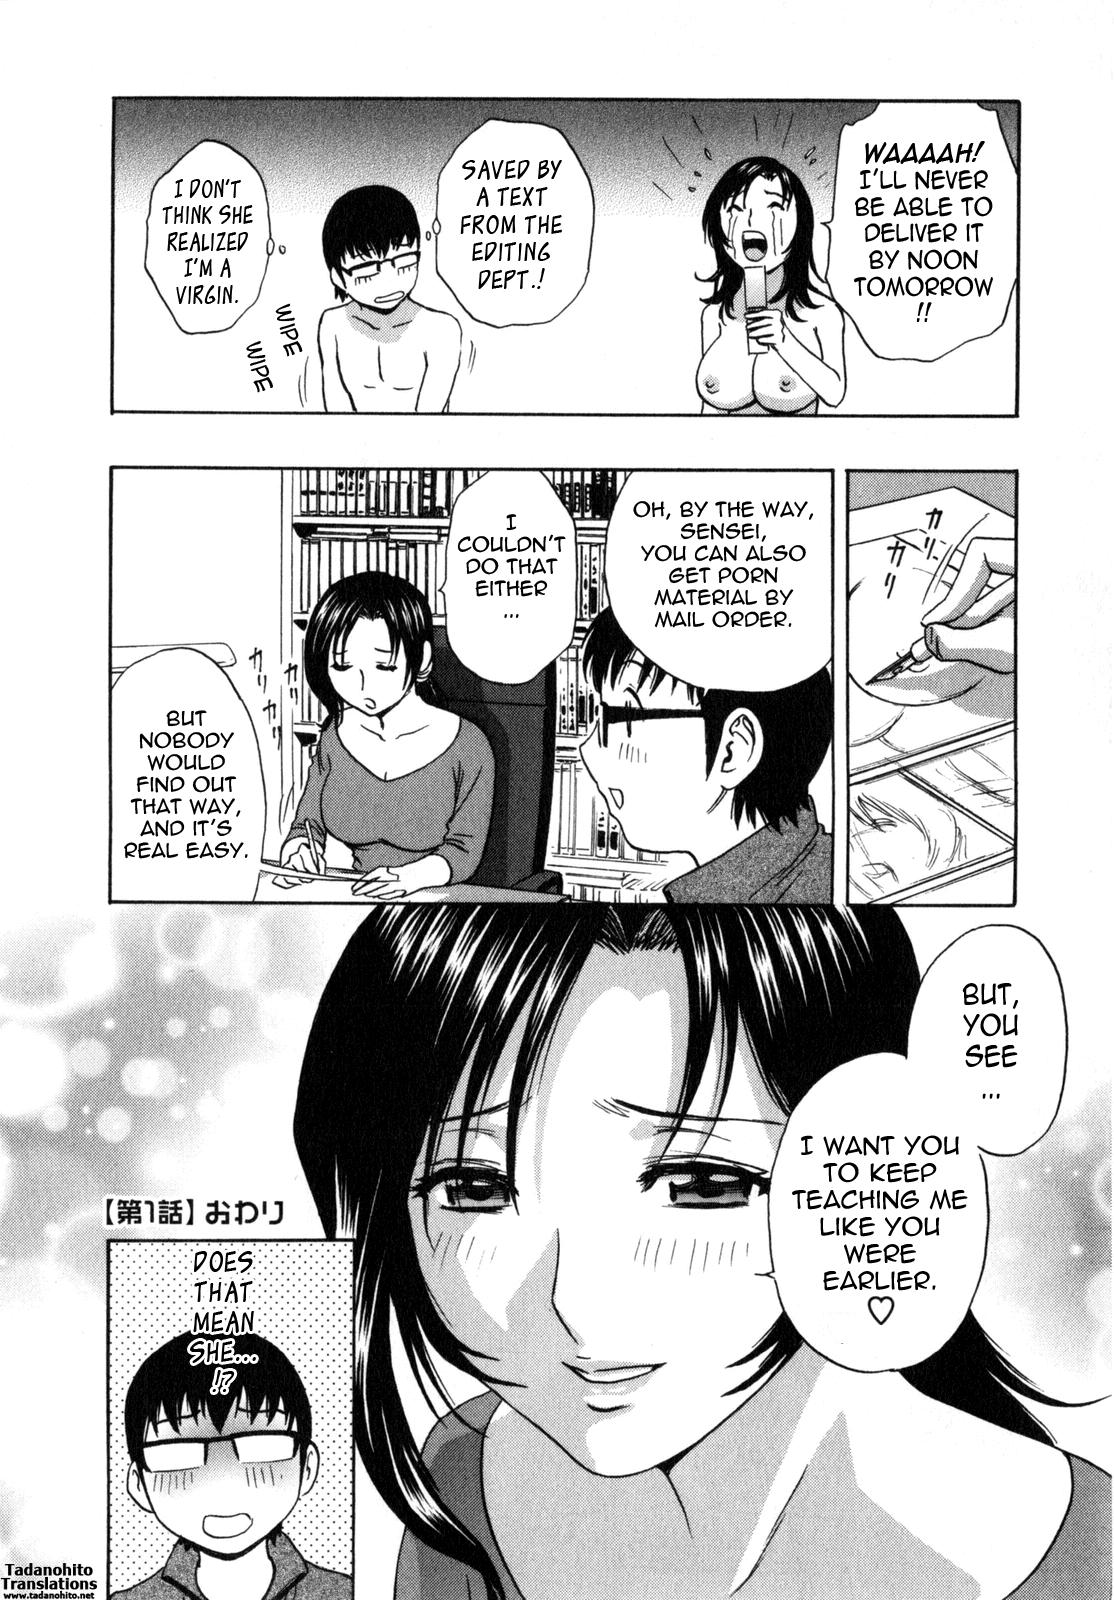 Life with Married Women Just Like a Manga 1 - Ch. 1 24